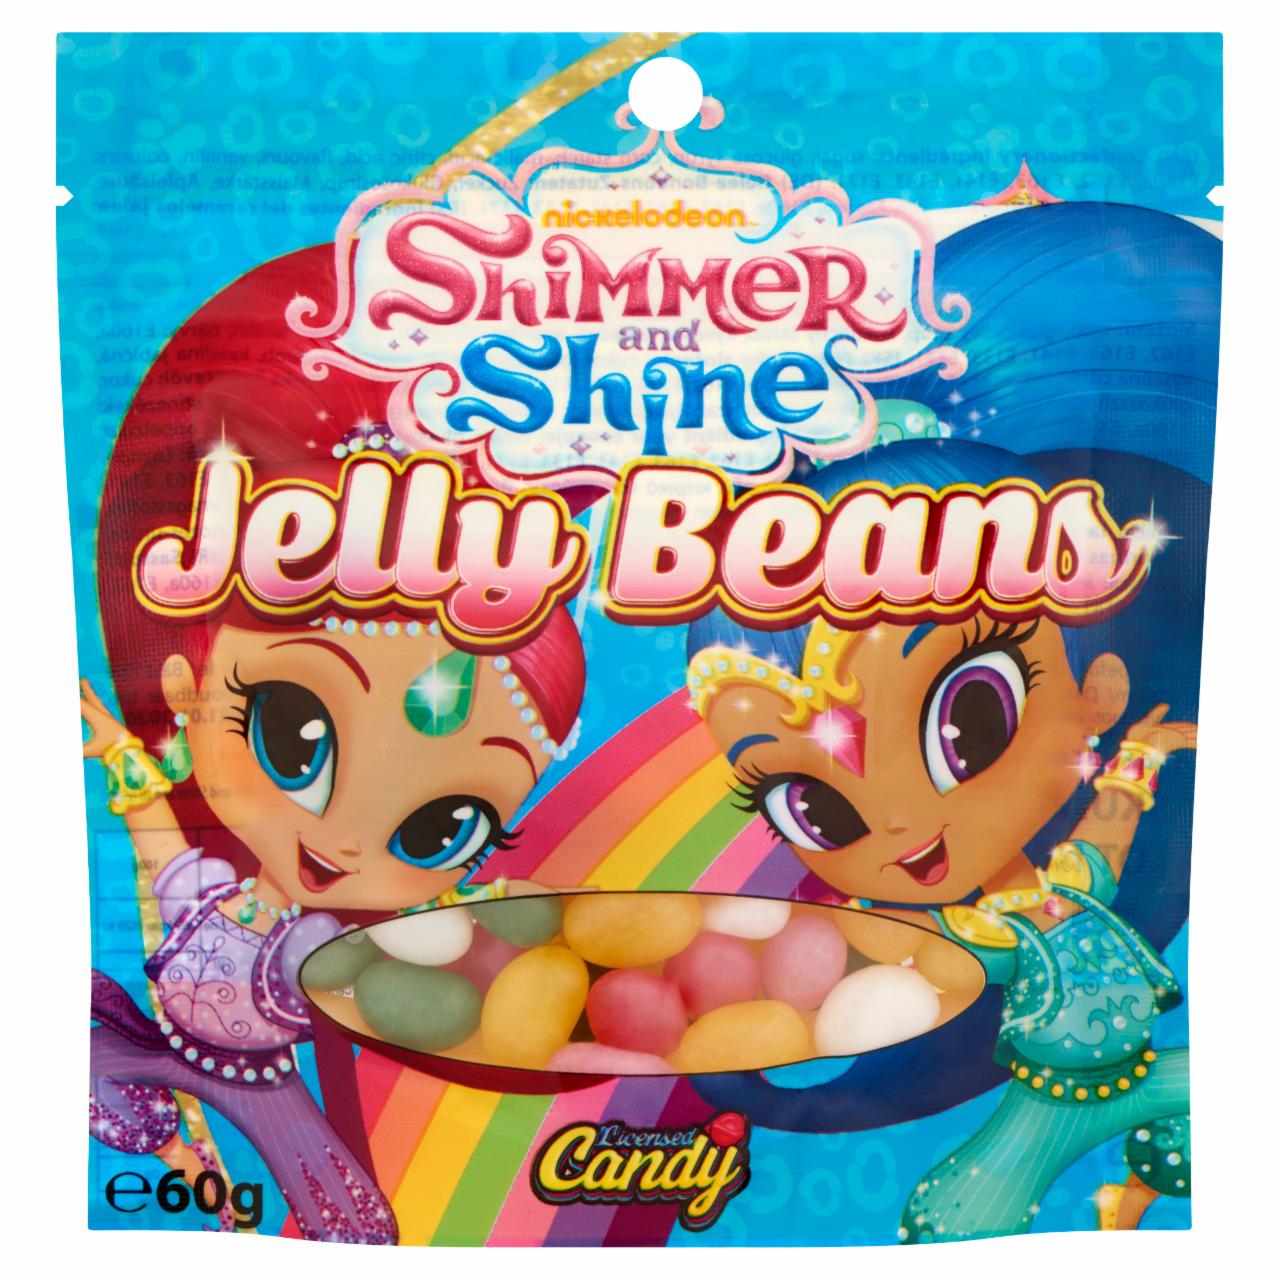 Képek - Jelly Beans Shimmer and Shine zselés cukorka 60 g